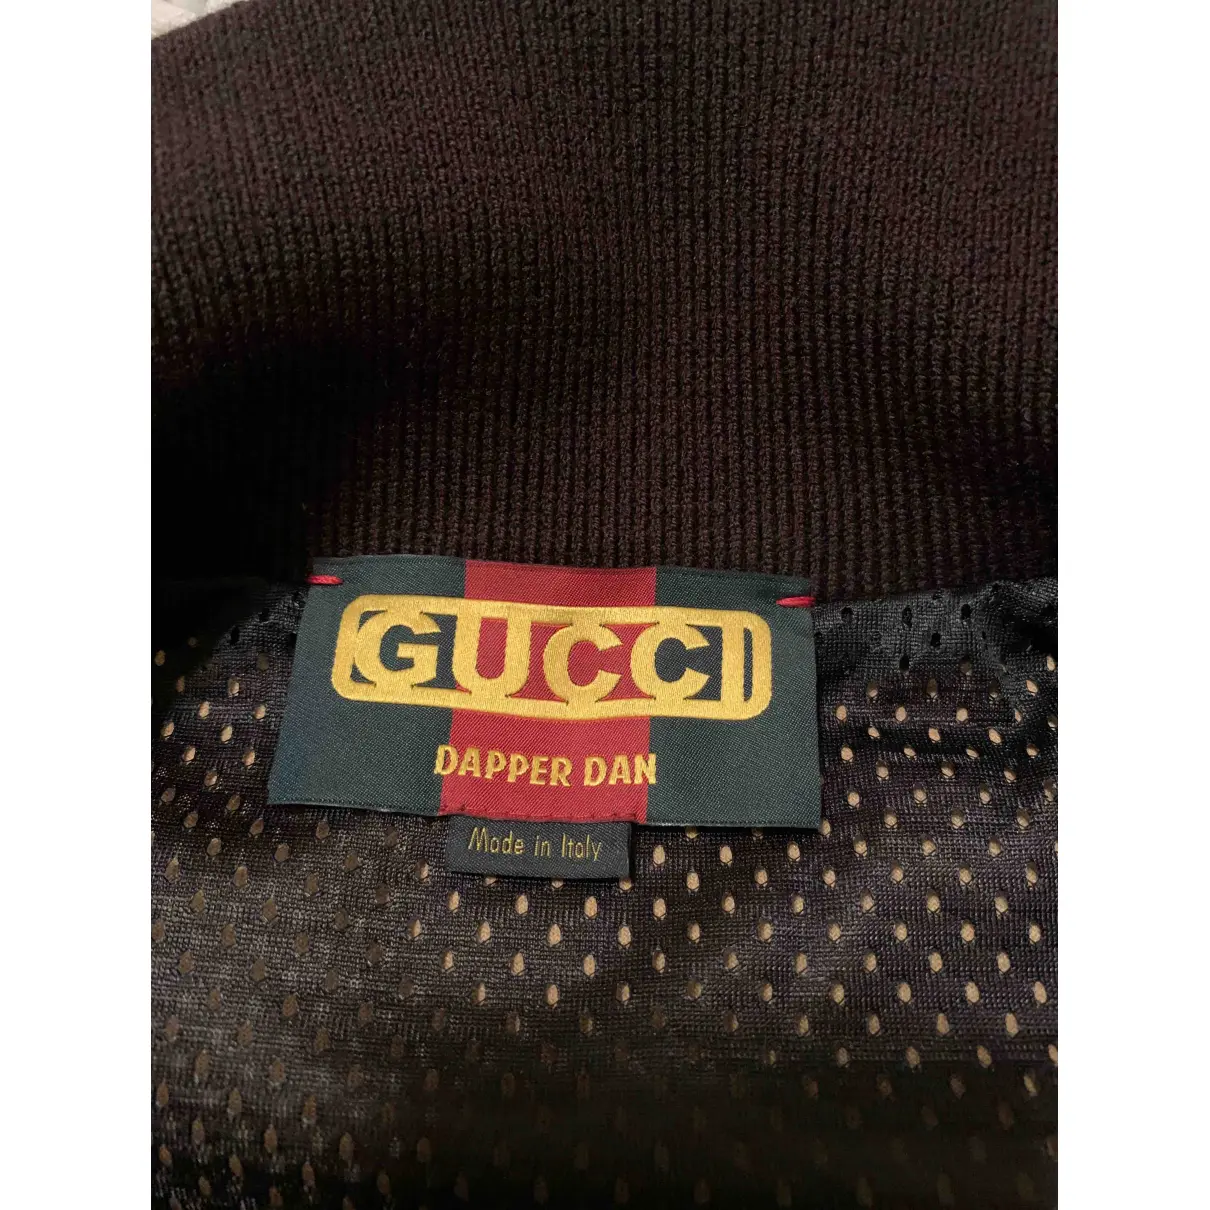 Buy Gucci Velvet jacket online